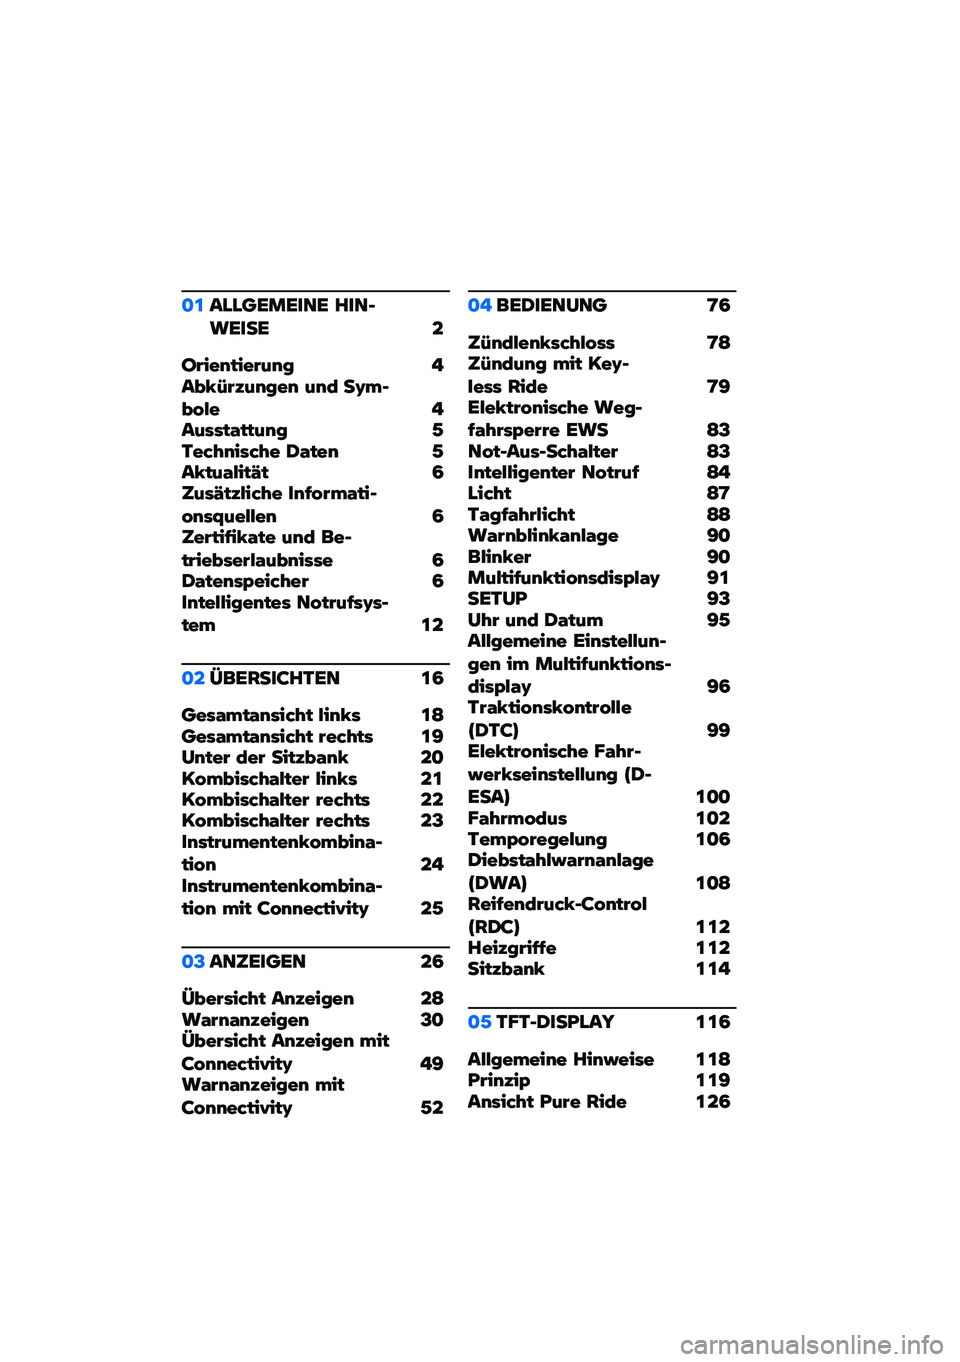 BMW MOTORRAD F 750 GS 2020  Betriebsanleitung (in German) ��
�����\b��\b��	�\b ���	���\b���\b �
������������ ���� �!��#����� ���$ ��%�&����(� ����)�)��*����� �+�-��.�/���)�.�/� �0�*��� �+�� ���*�(�